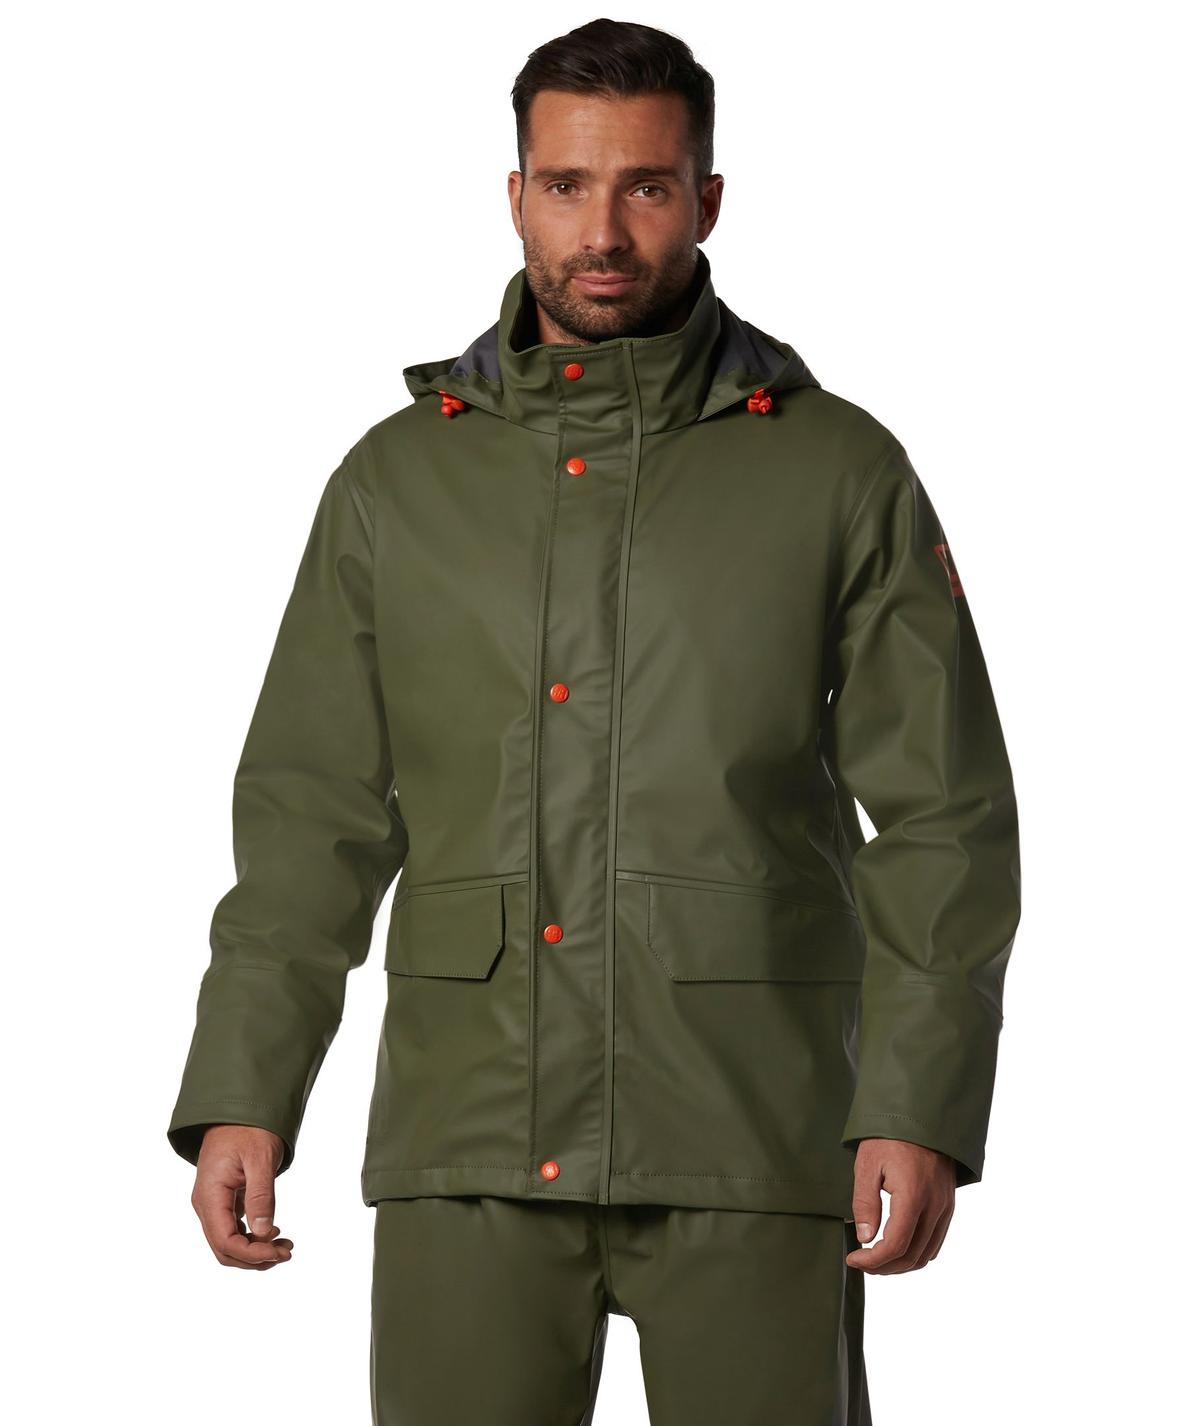 Helly Hansen Workwear Men's Gale Rain Jacket offers at $159.99 in Mark's